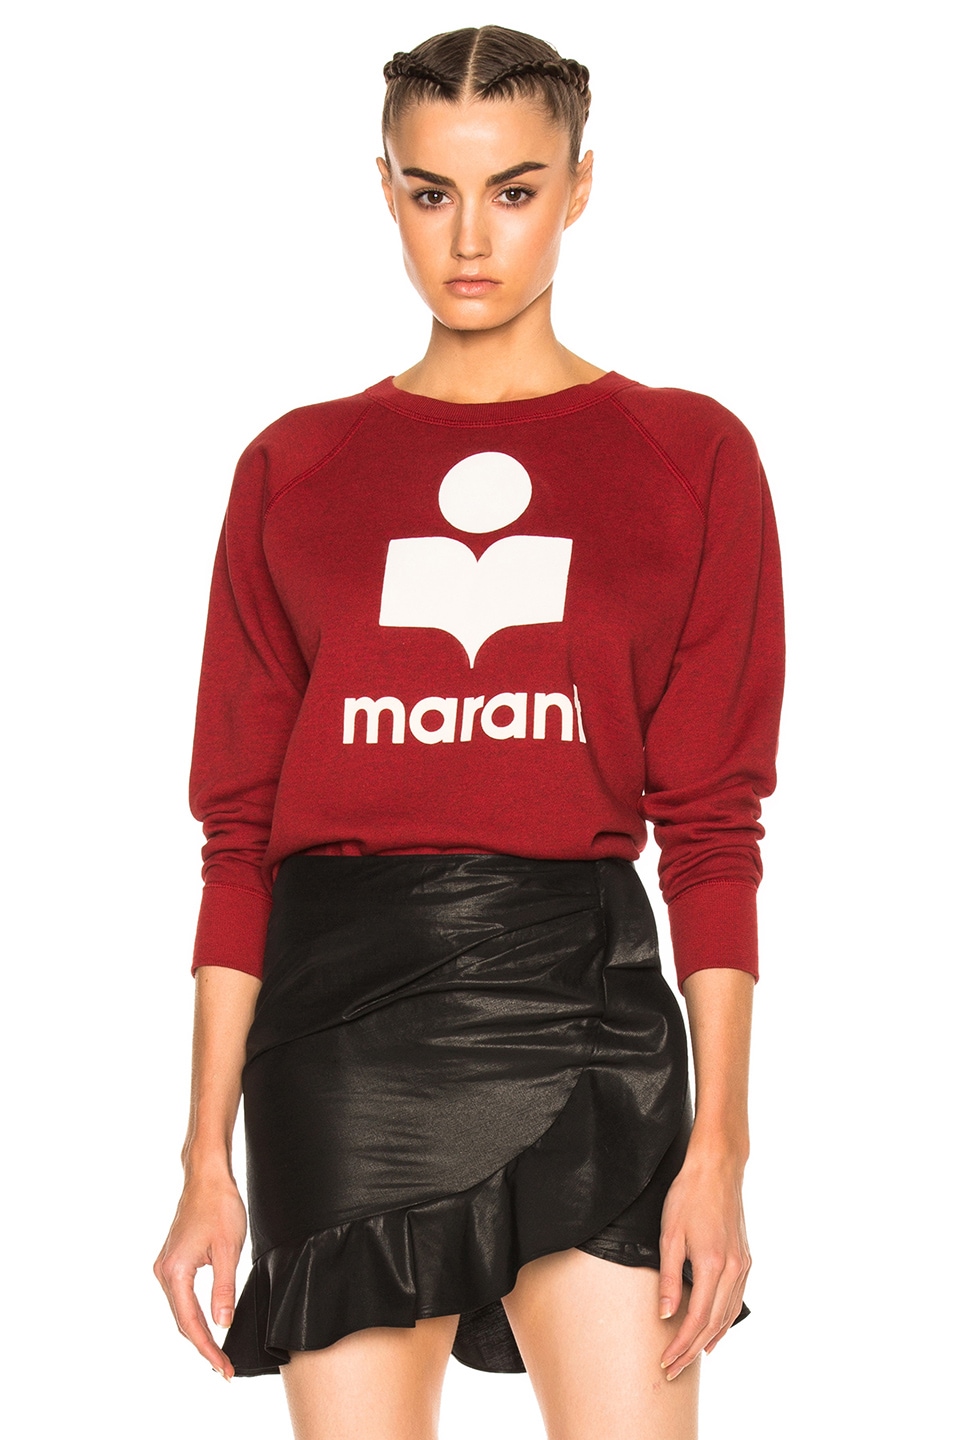 Isabel Marant Etoile Milly Marant Crewneck Sweatshirt in Red | FWRD